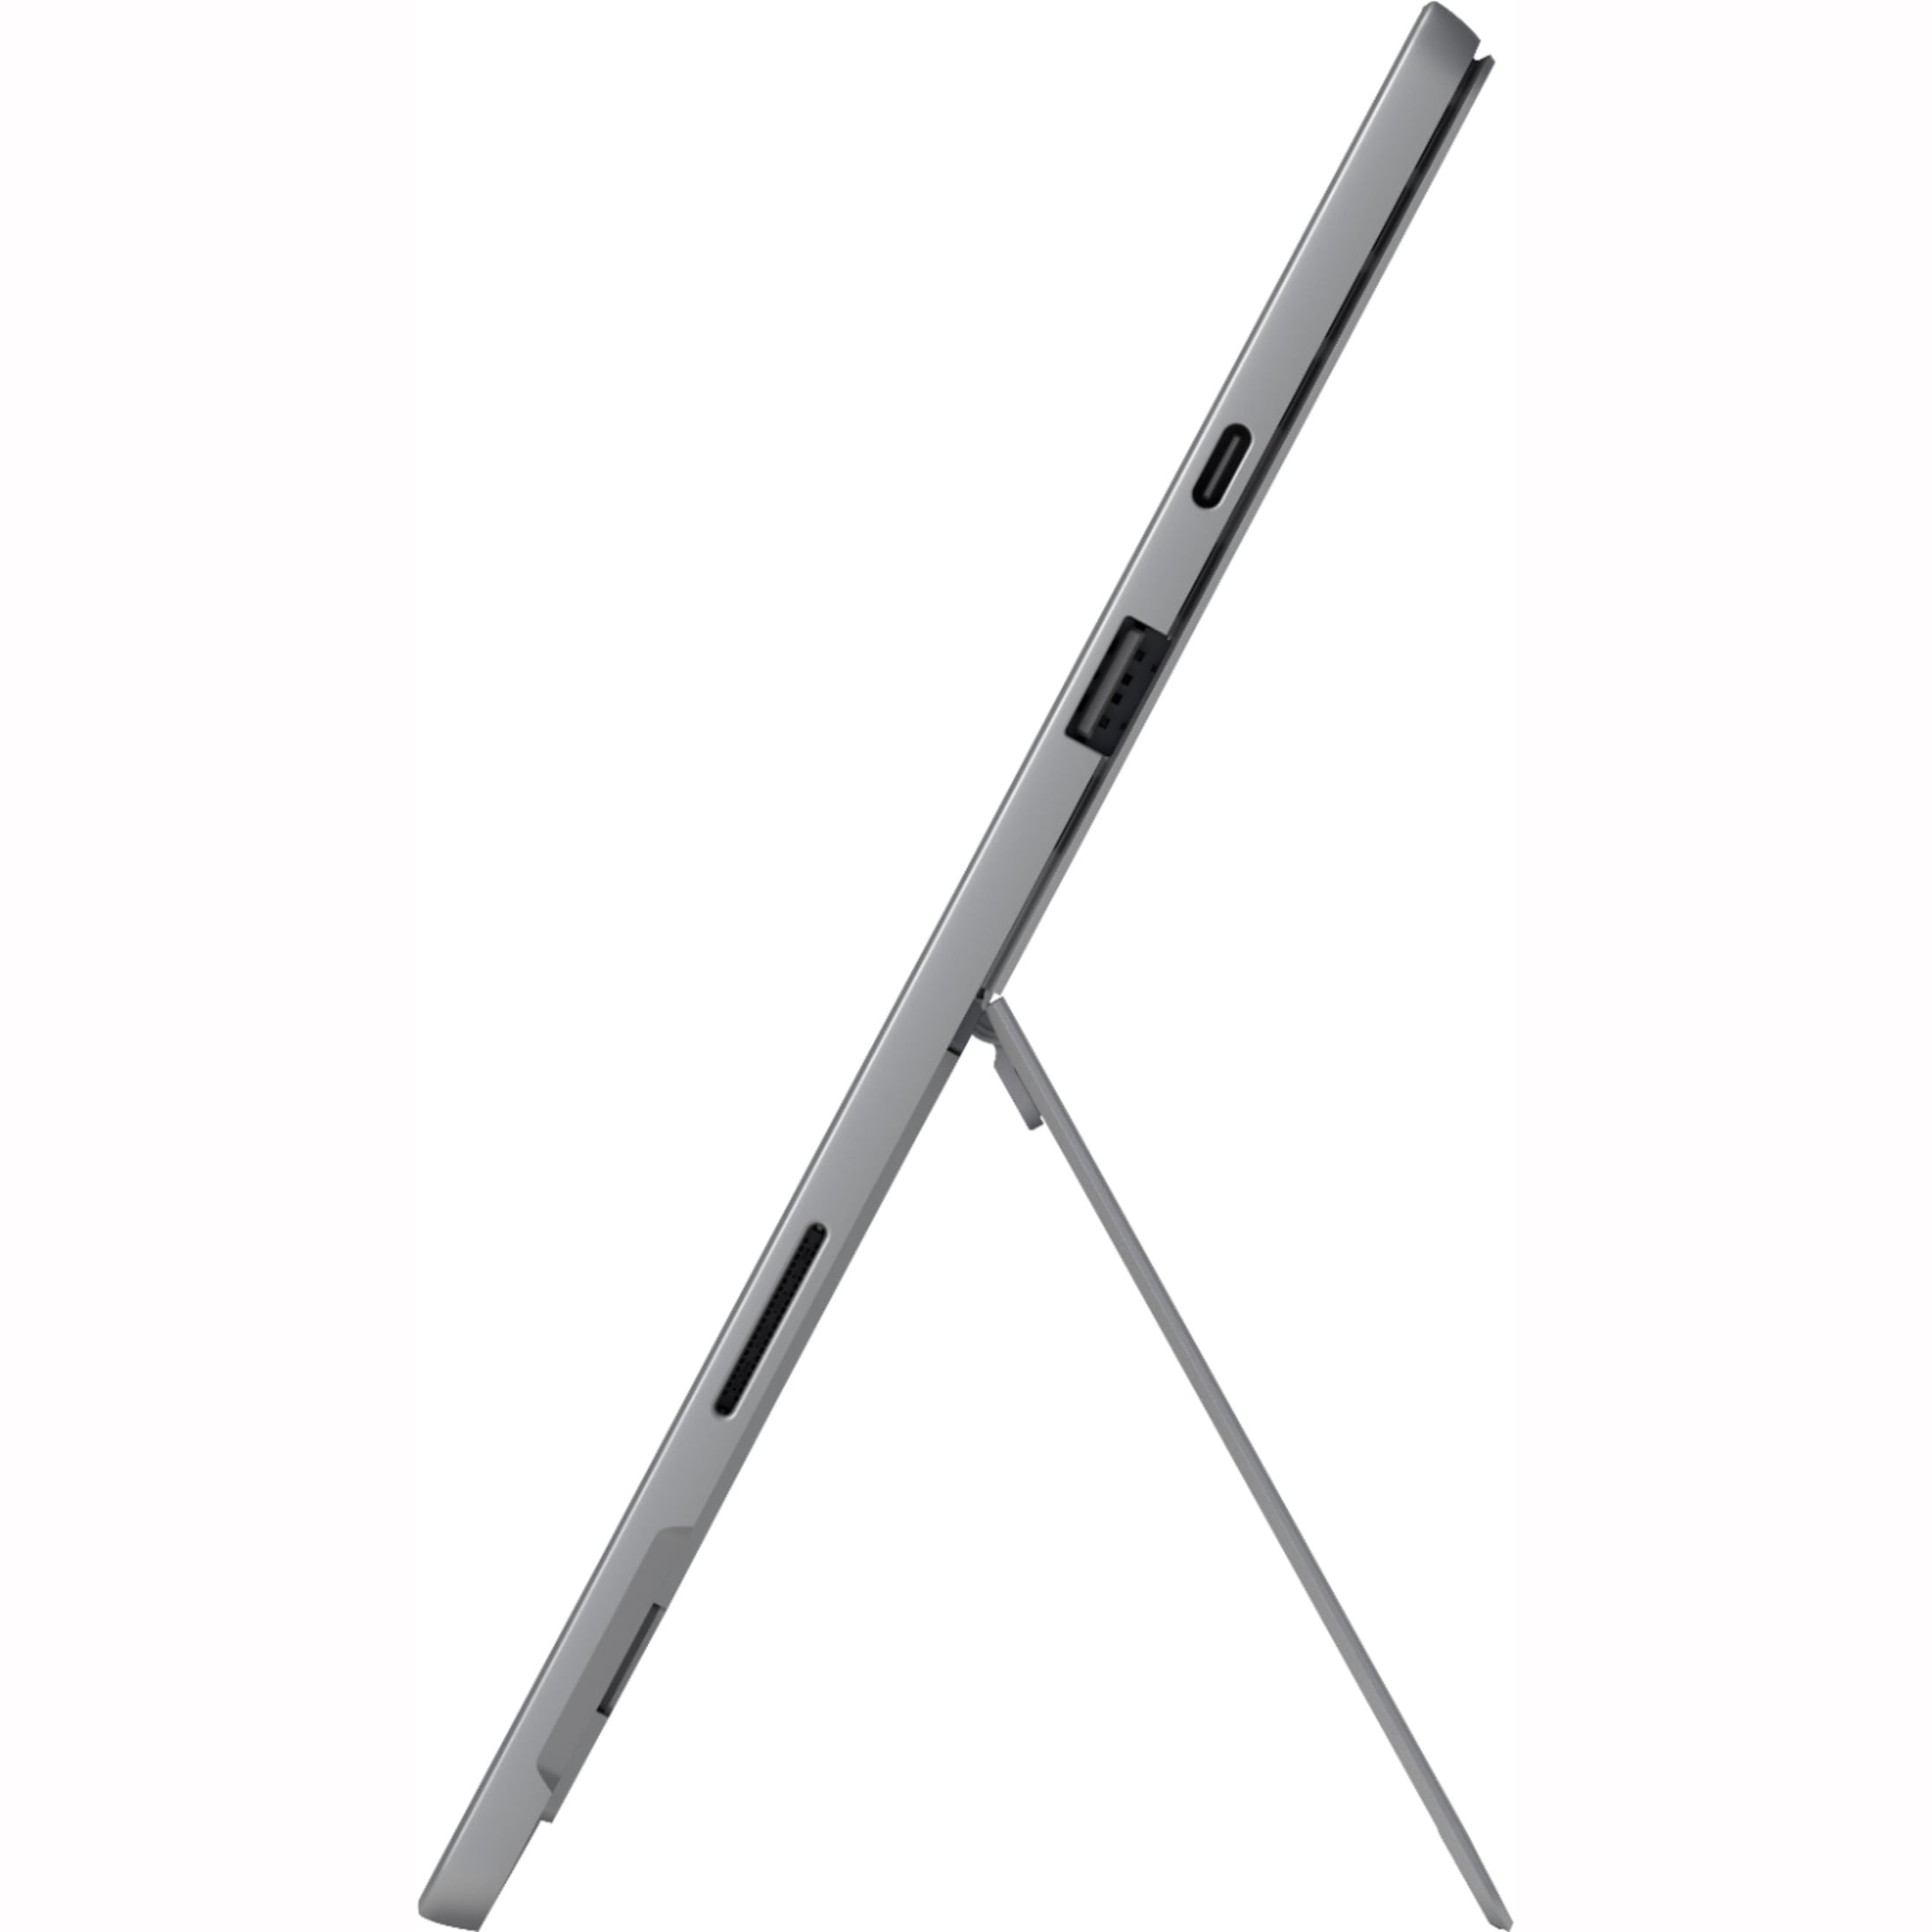 Microsoft Surface Pro-7 Retail 12.3